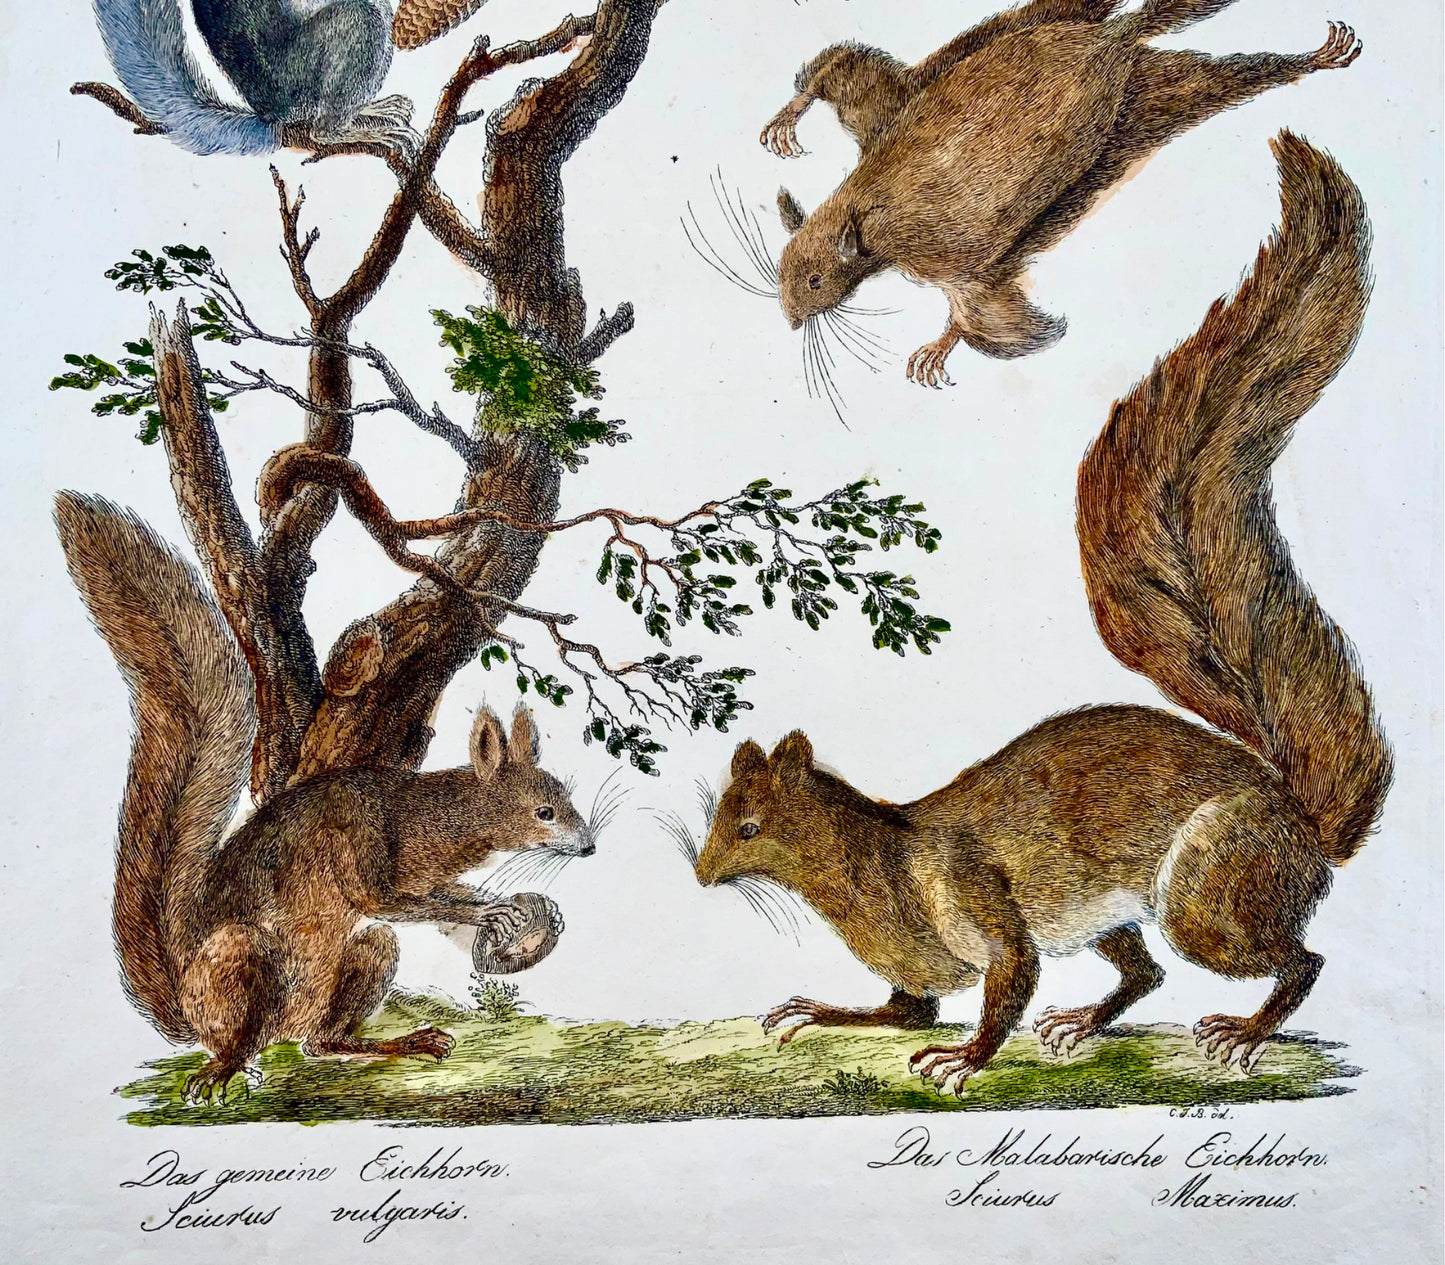 1816 SQUIRRELS - Brodtmann - Imp. folio 42.5 cm 'Incunabula of Lithography' - Mammals